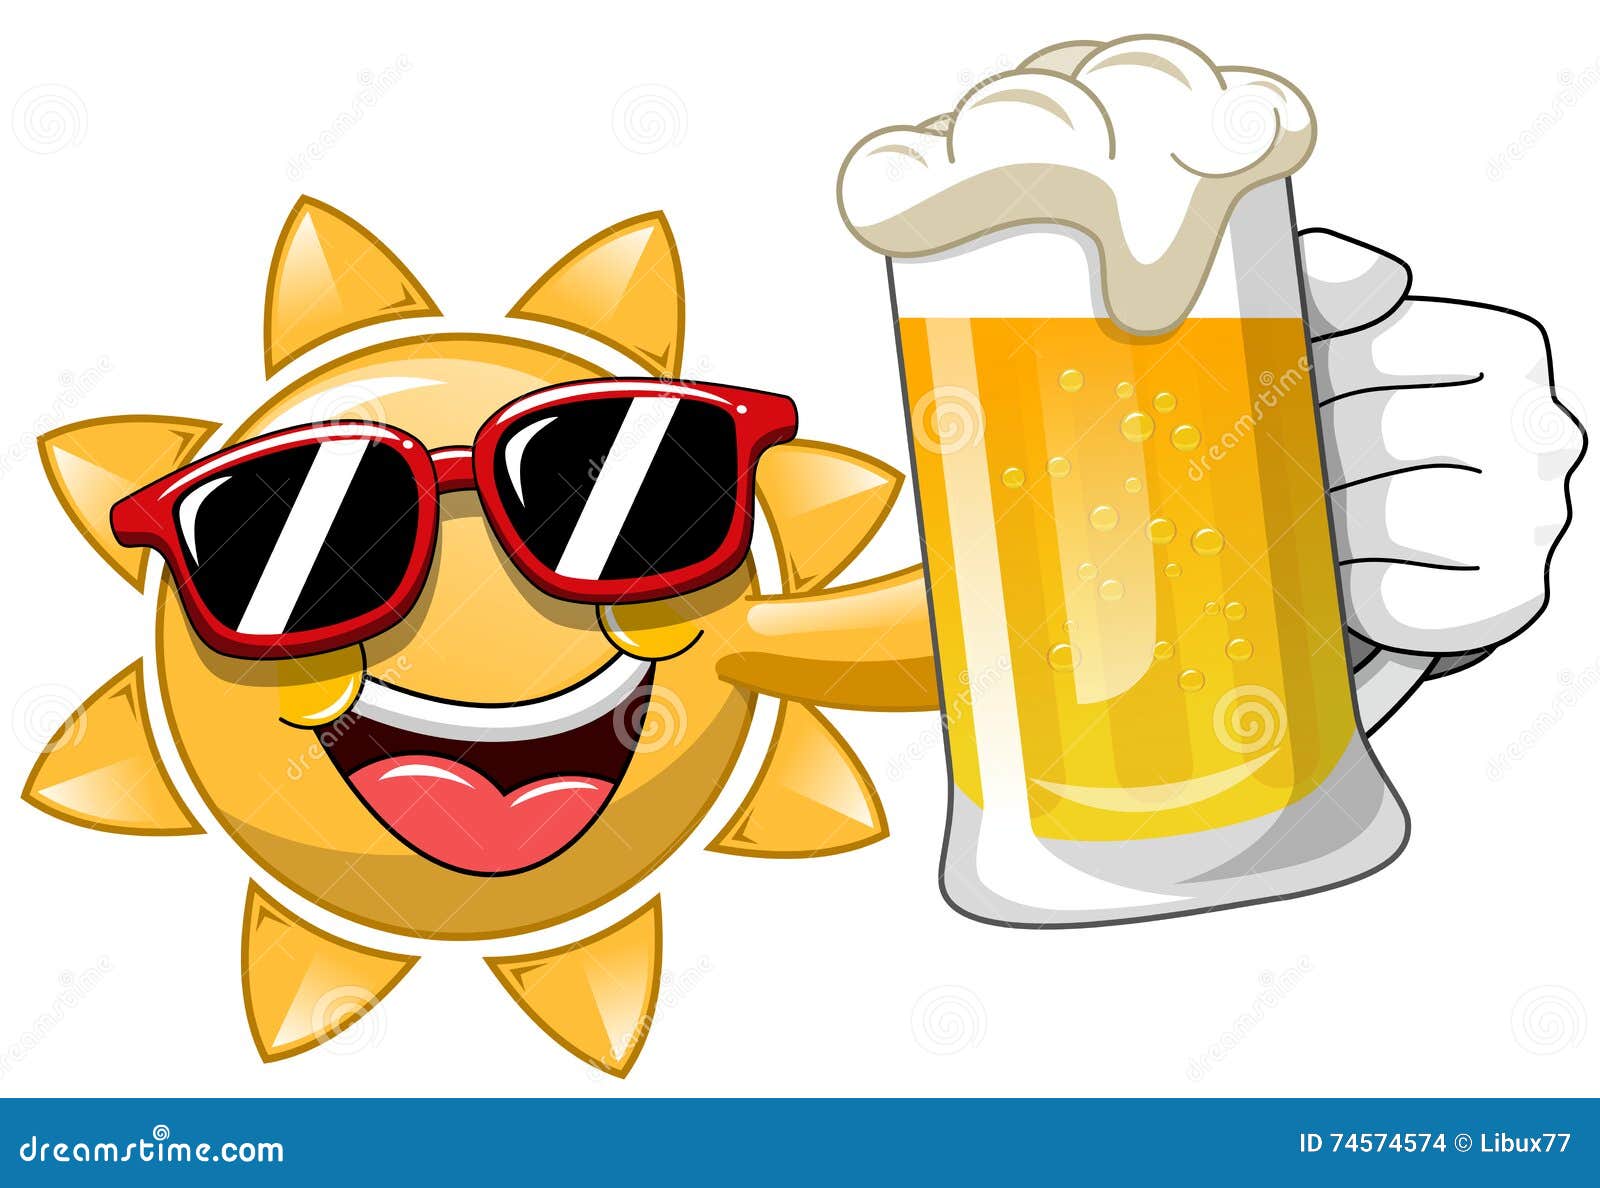 cartoon sun drinking beer